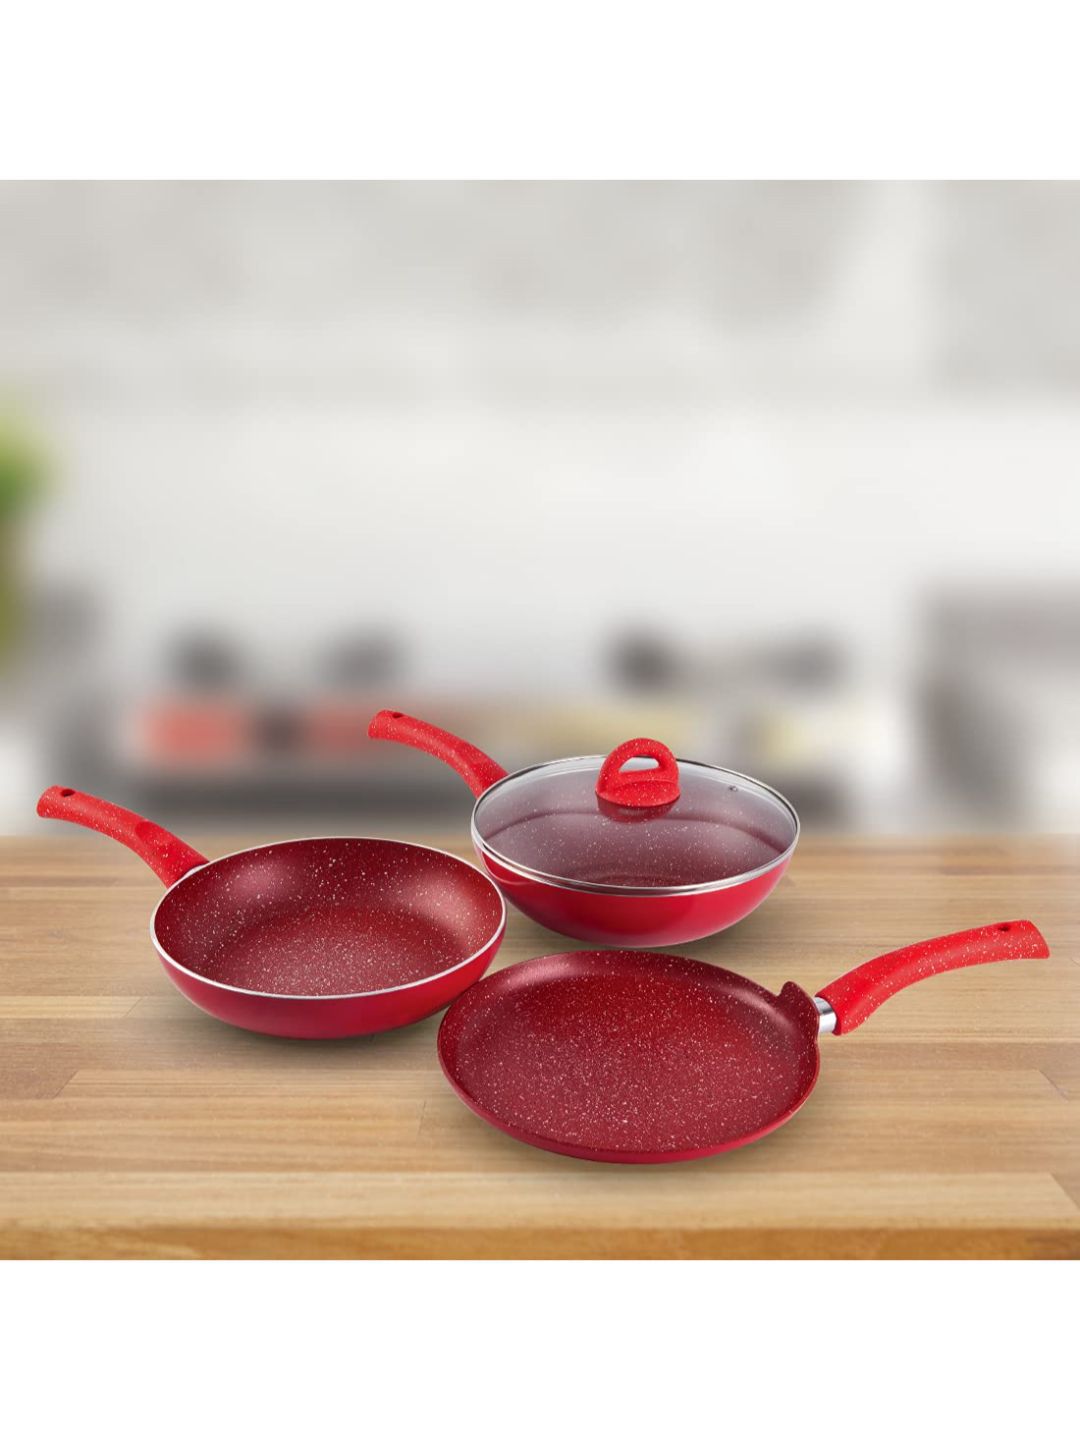 Wonderchef Red Granite Nonstick 3-Piece Cookware Set Price in India